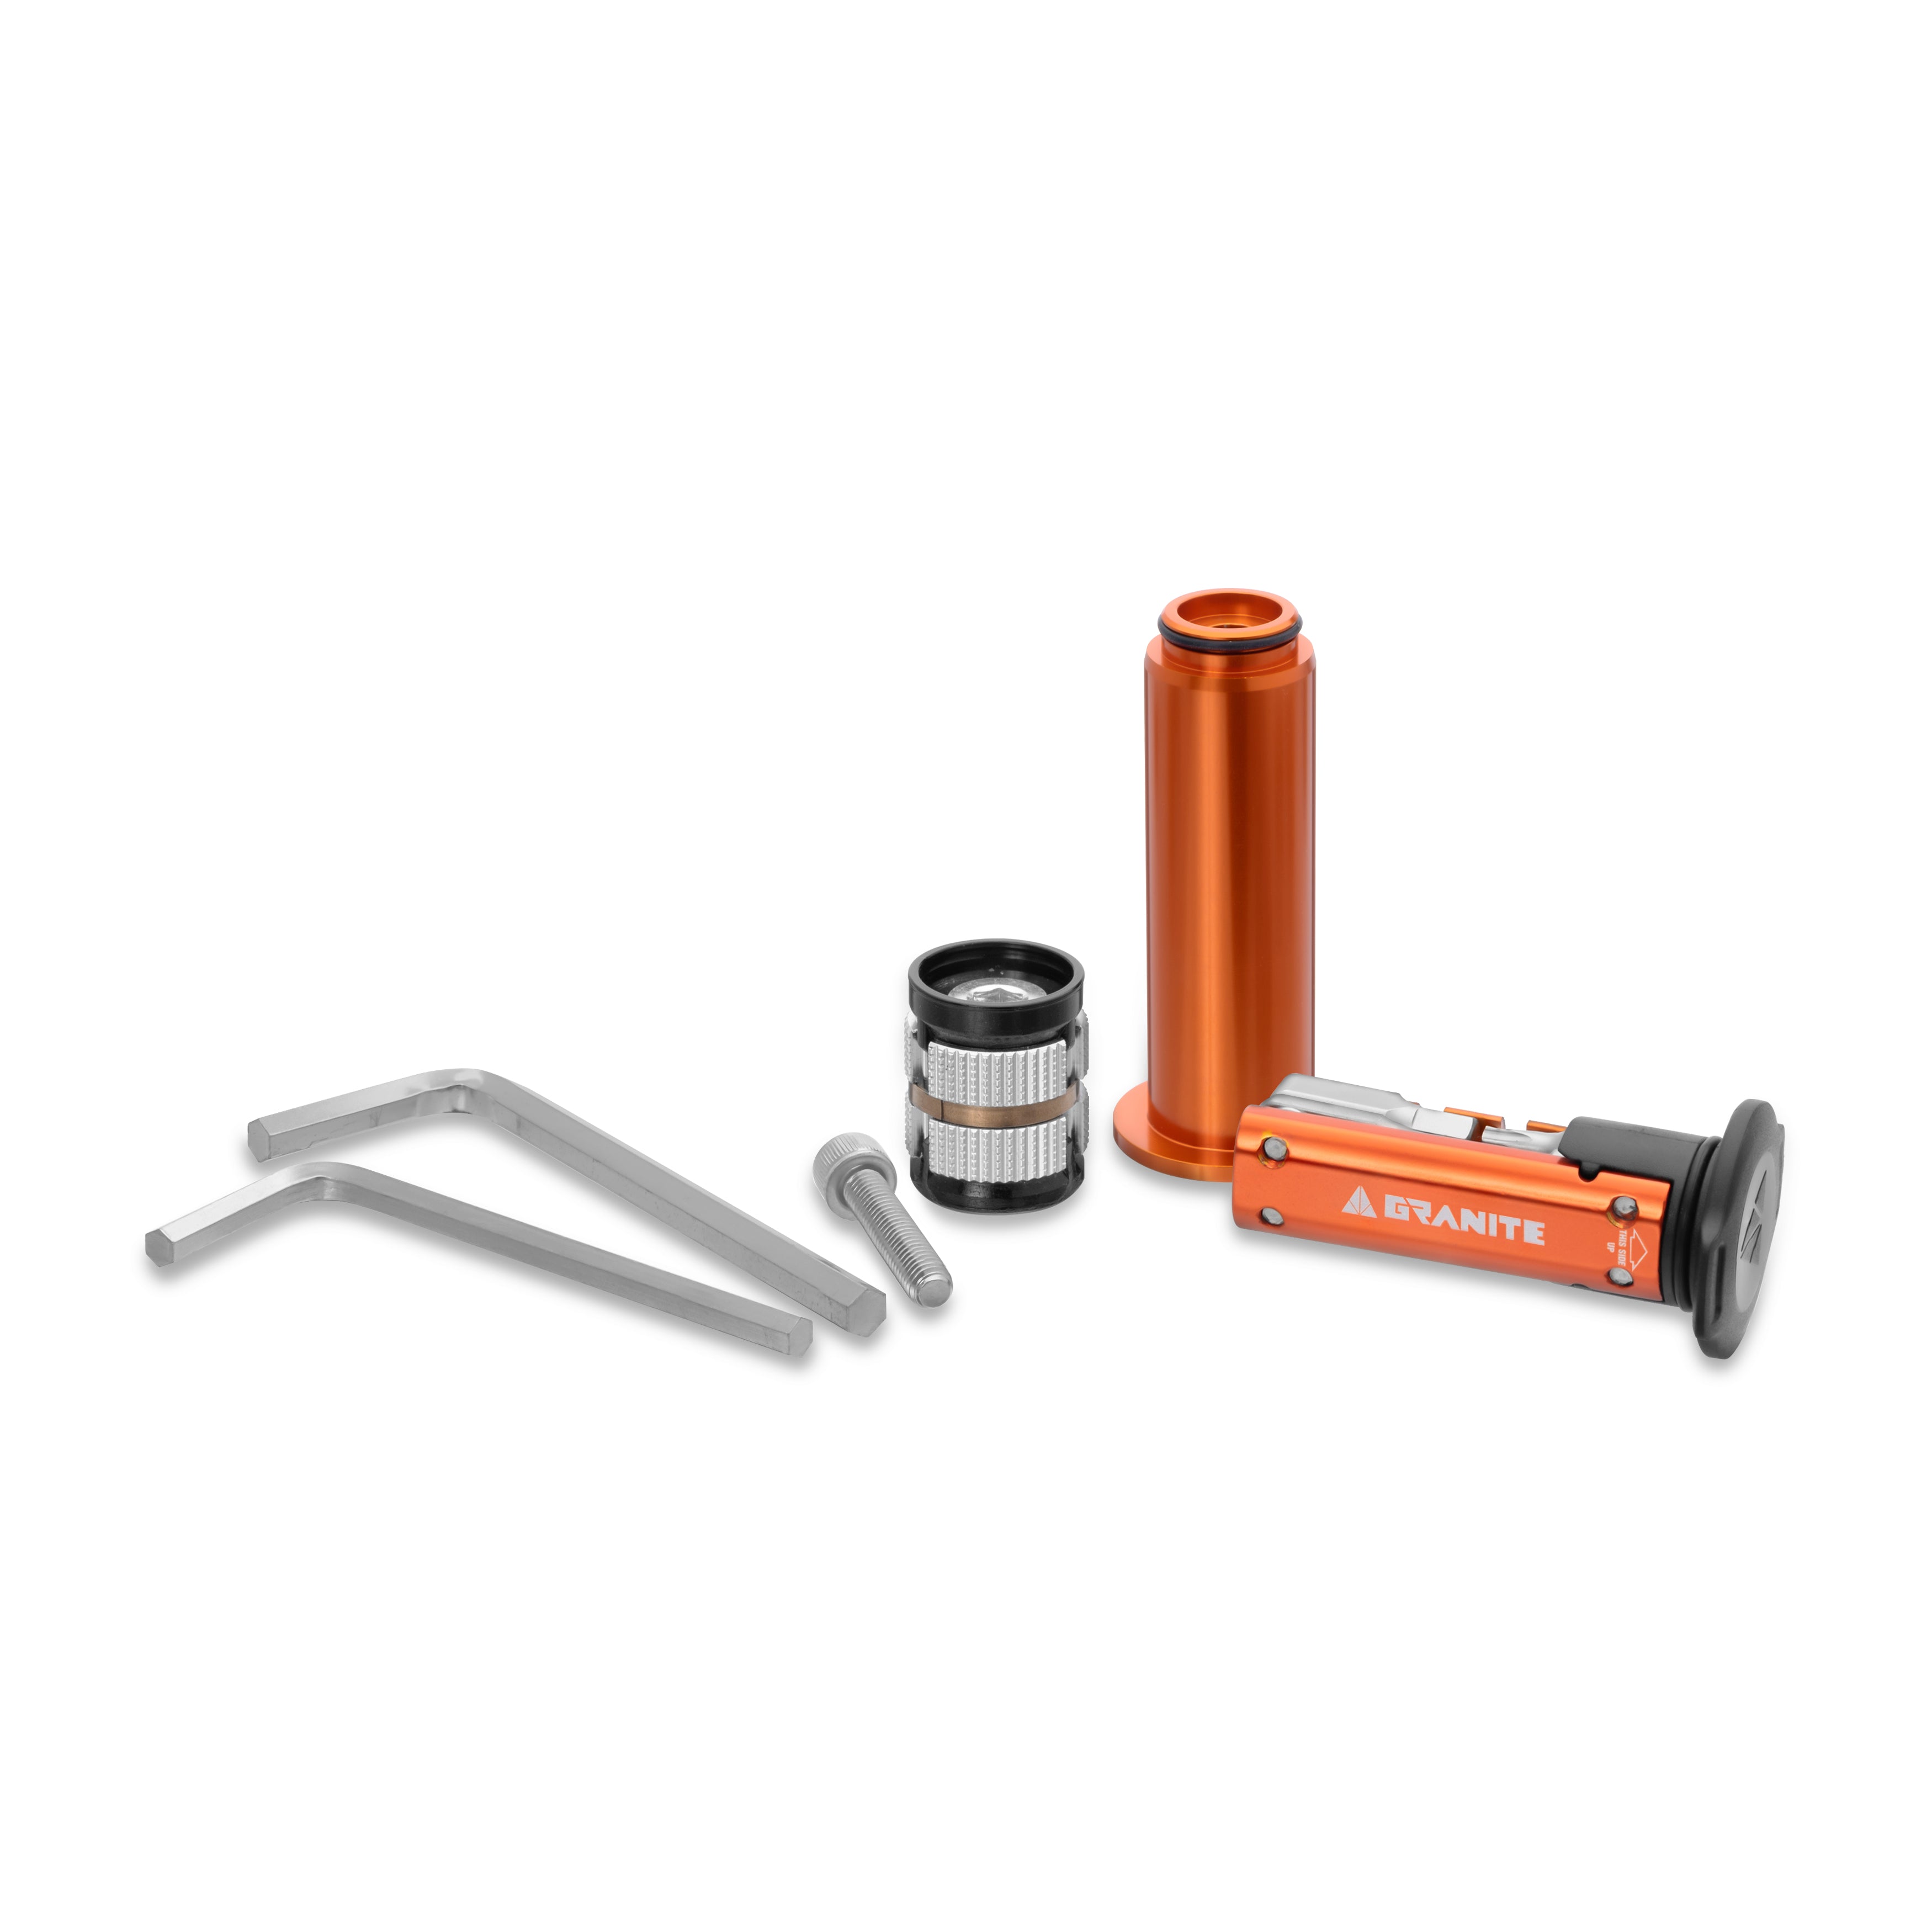 Granite Rocknroll - Kit de herramientas para bicicleta de trinquete  pequeño, kit multiherramienta para bicicleta con 9 puntas de herramientas y